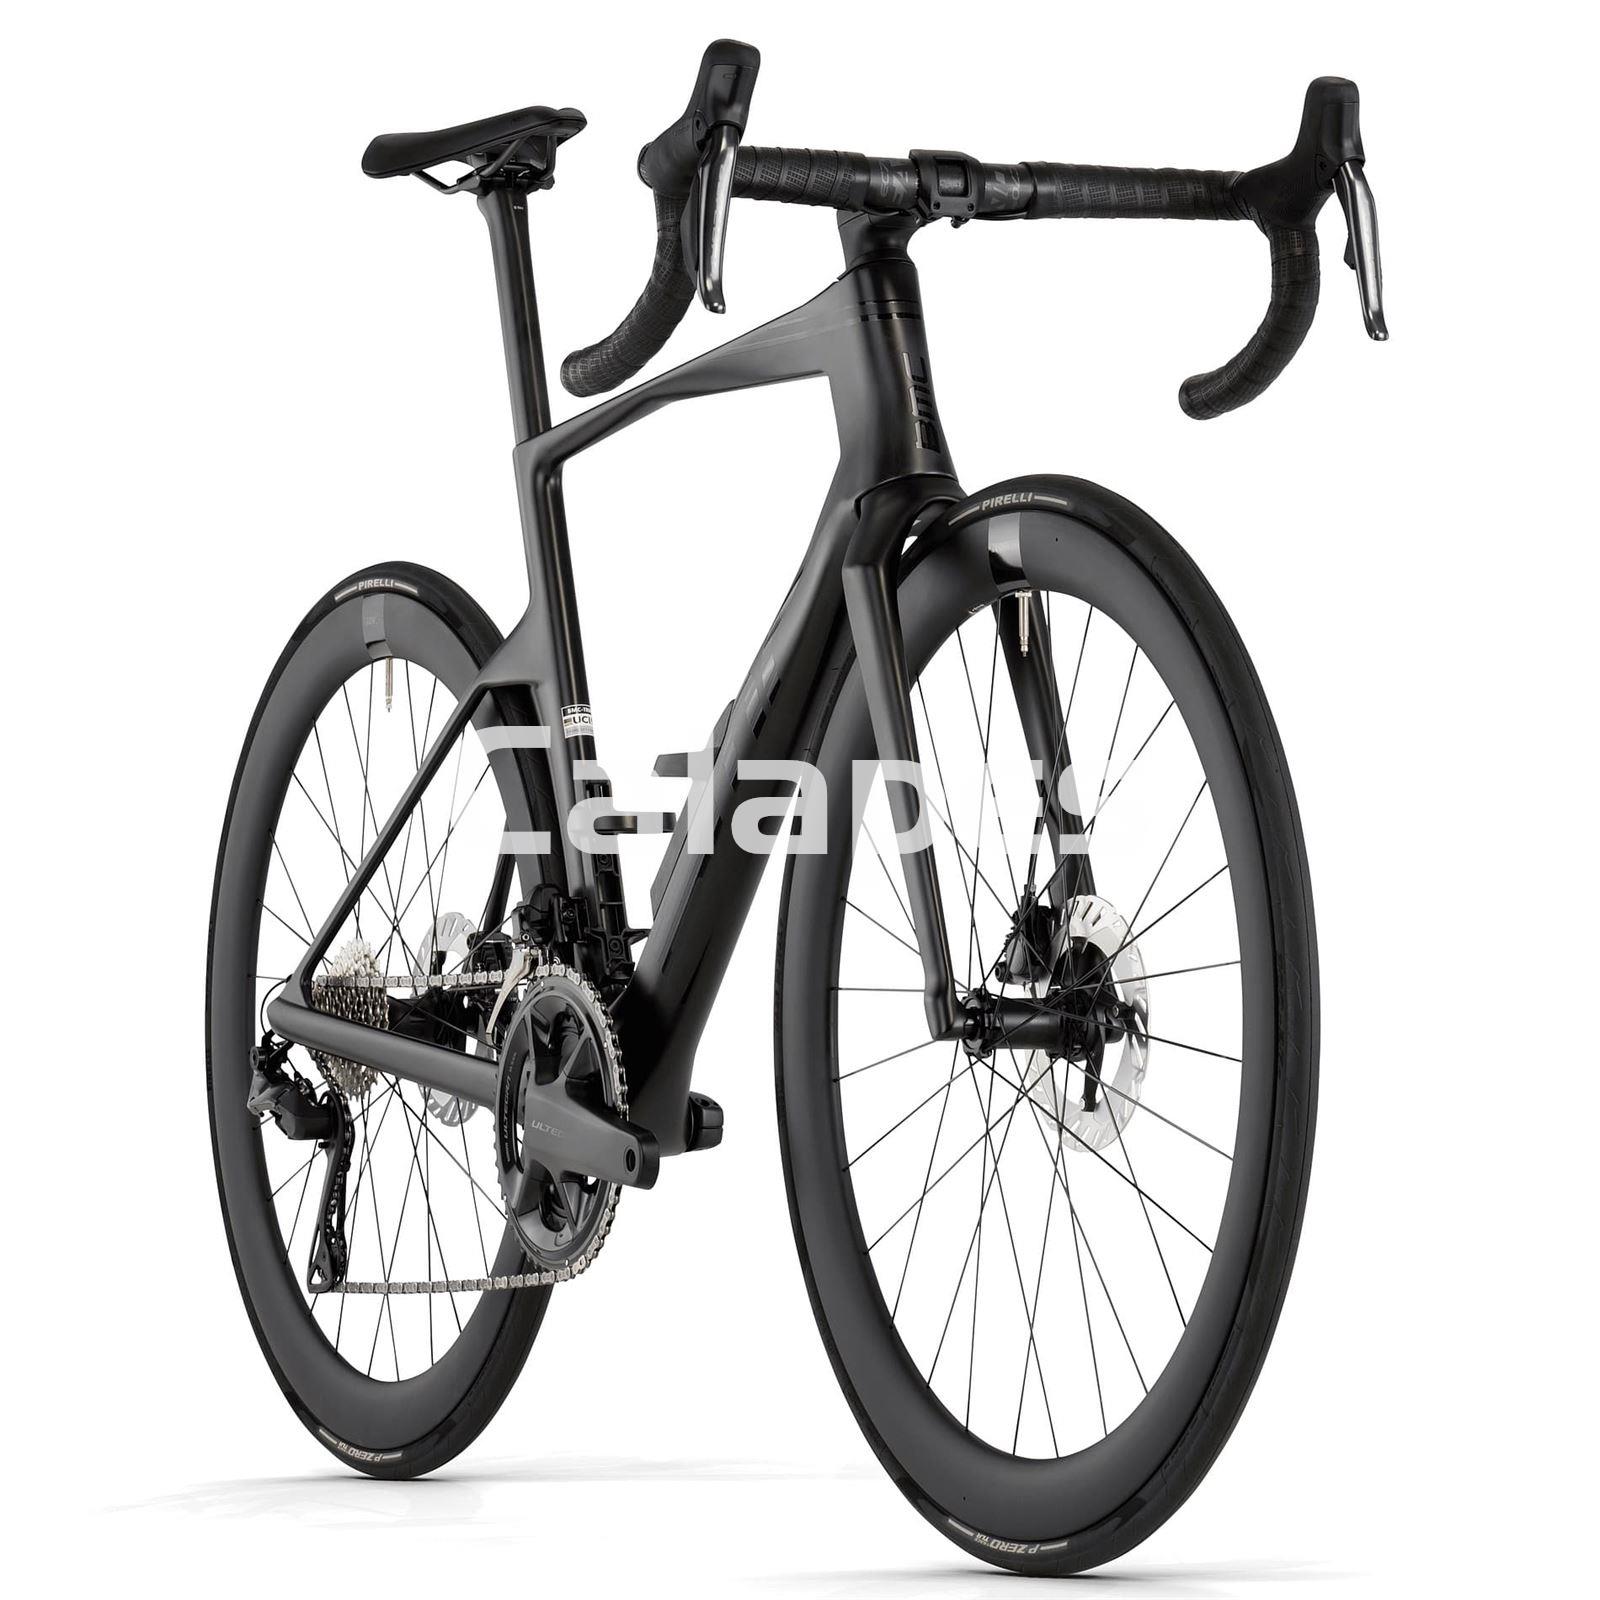 Bicicleta Teammachine R 01 FOUR Shimano Ultegra Di2 12v - Imagen 1